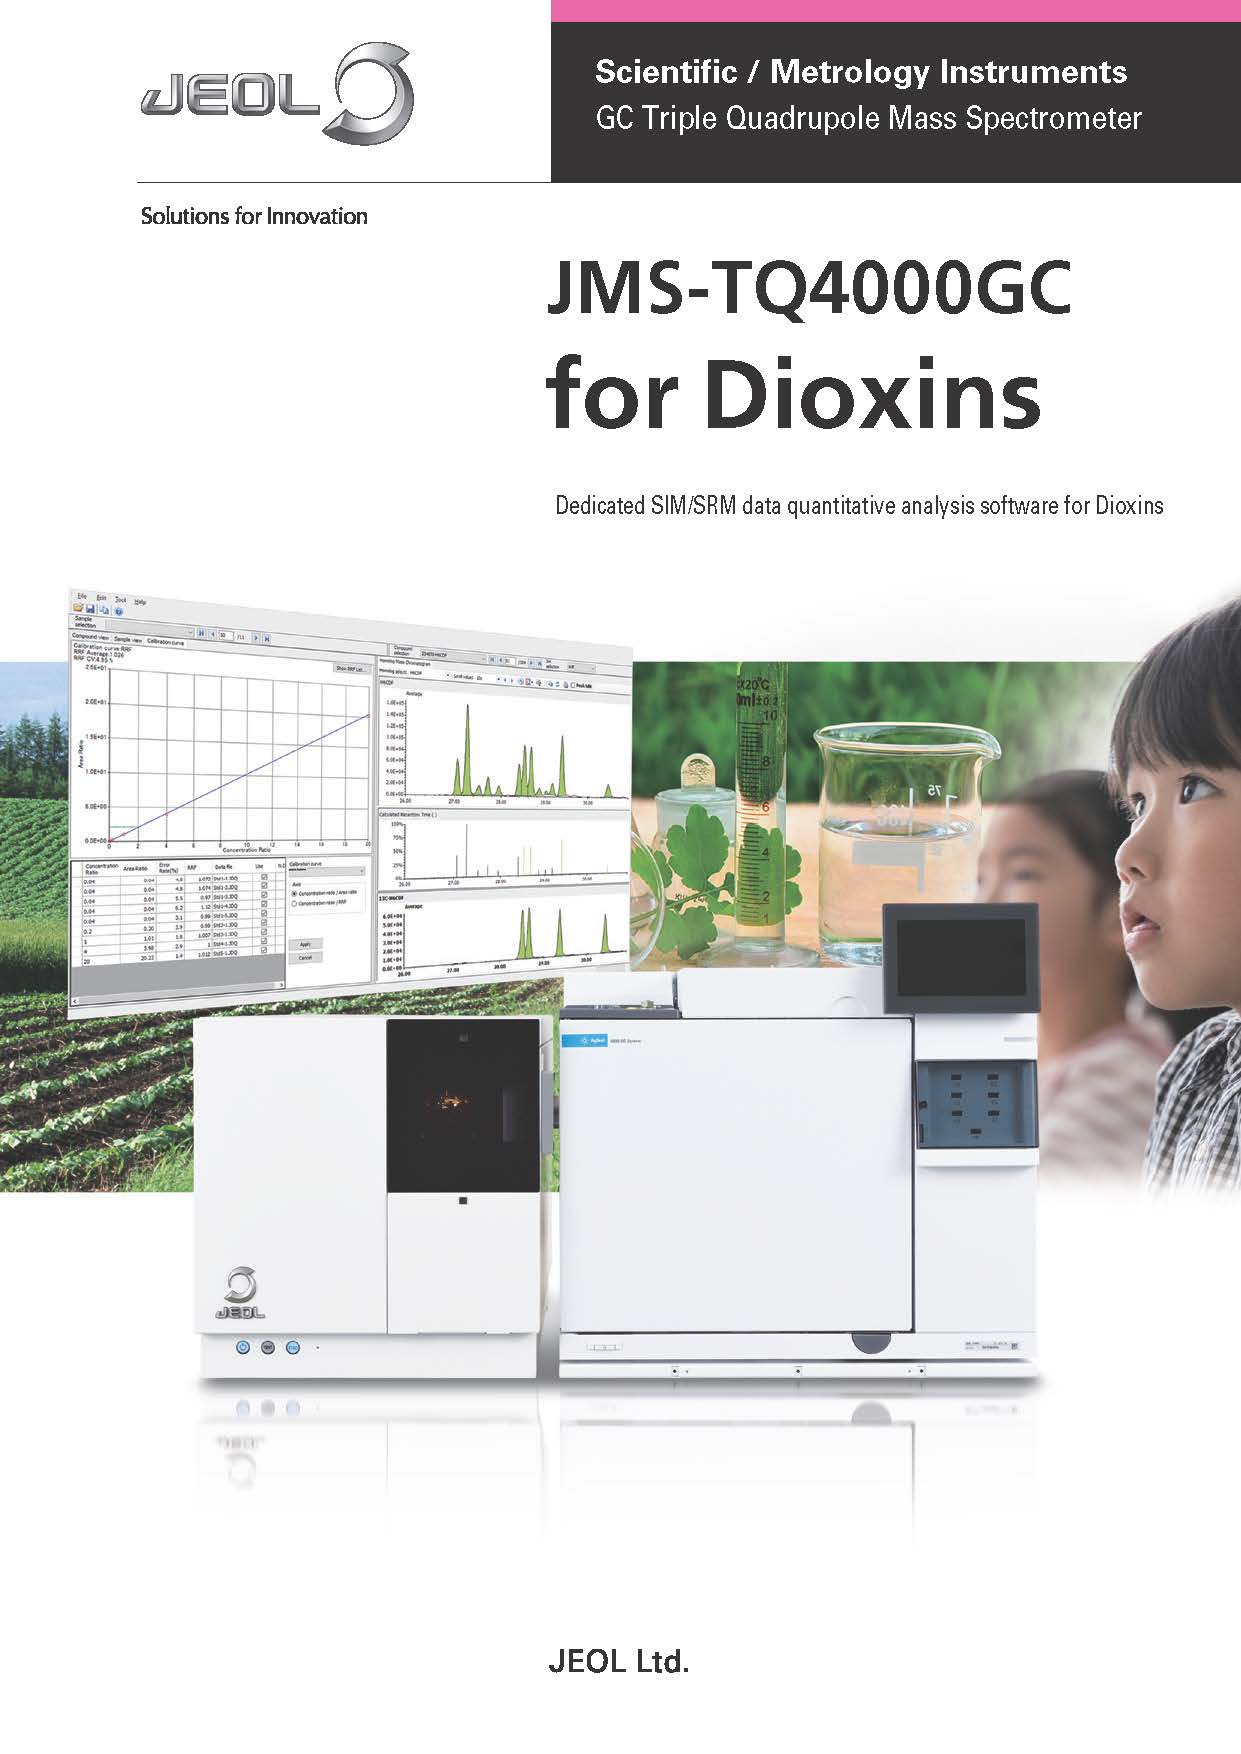 JMS-TQ4000GC for Dioxins